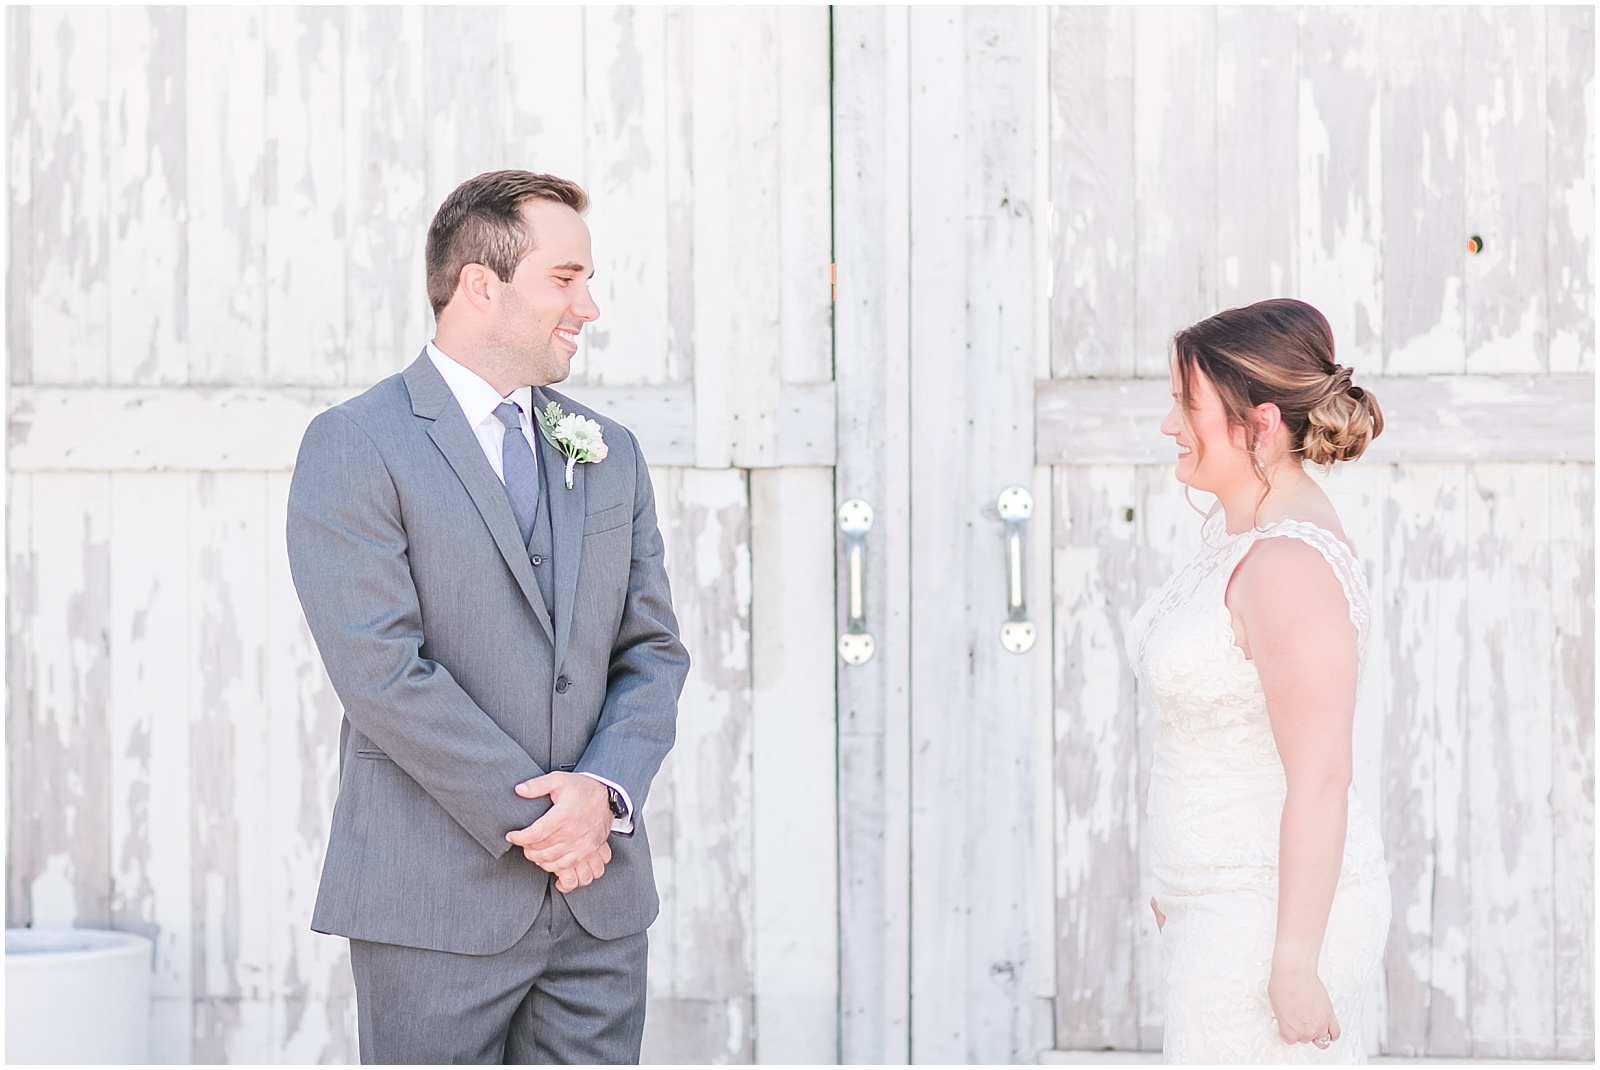 Wedding Day Timeline Tips | Tips for Brides